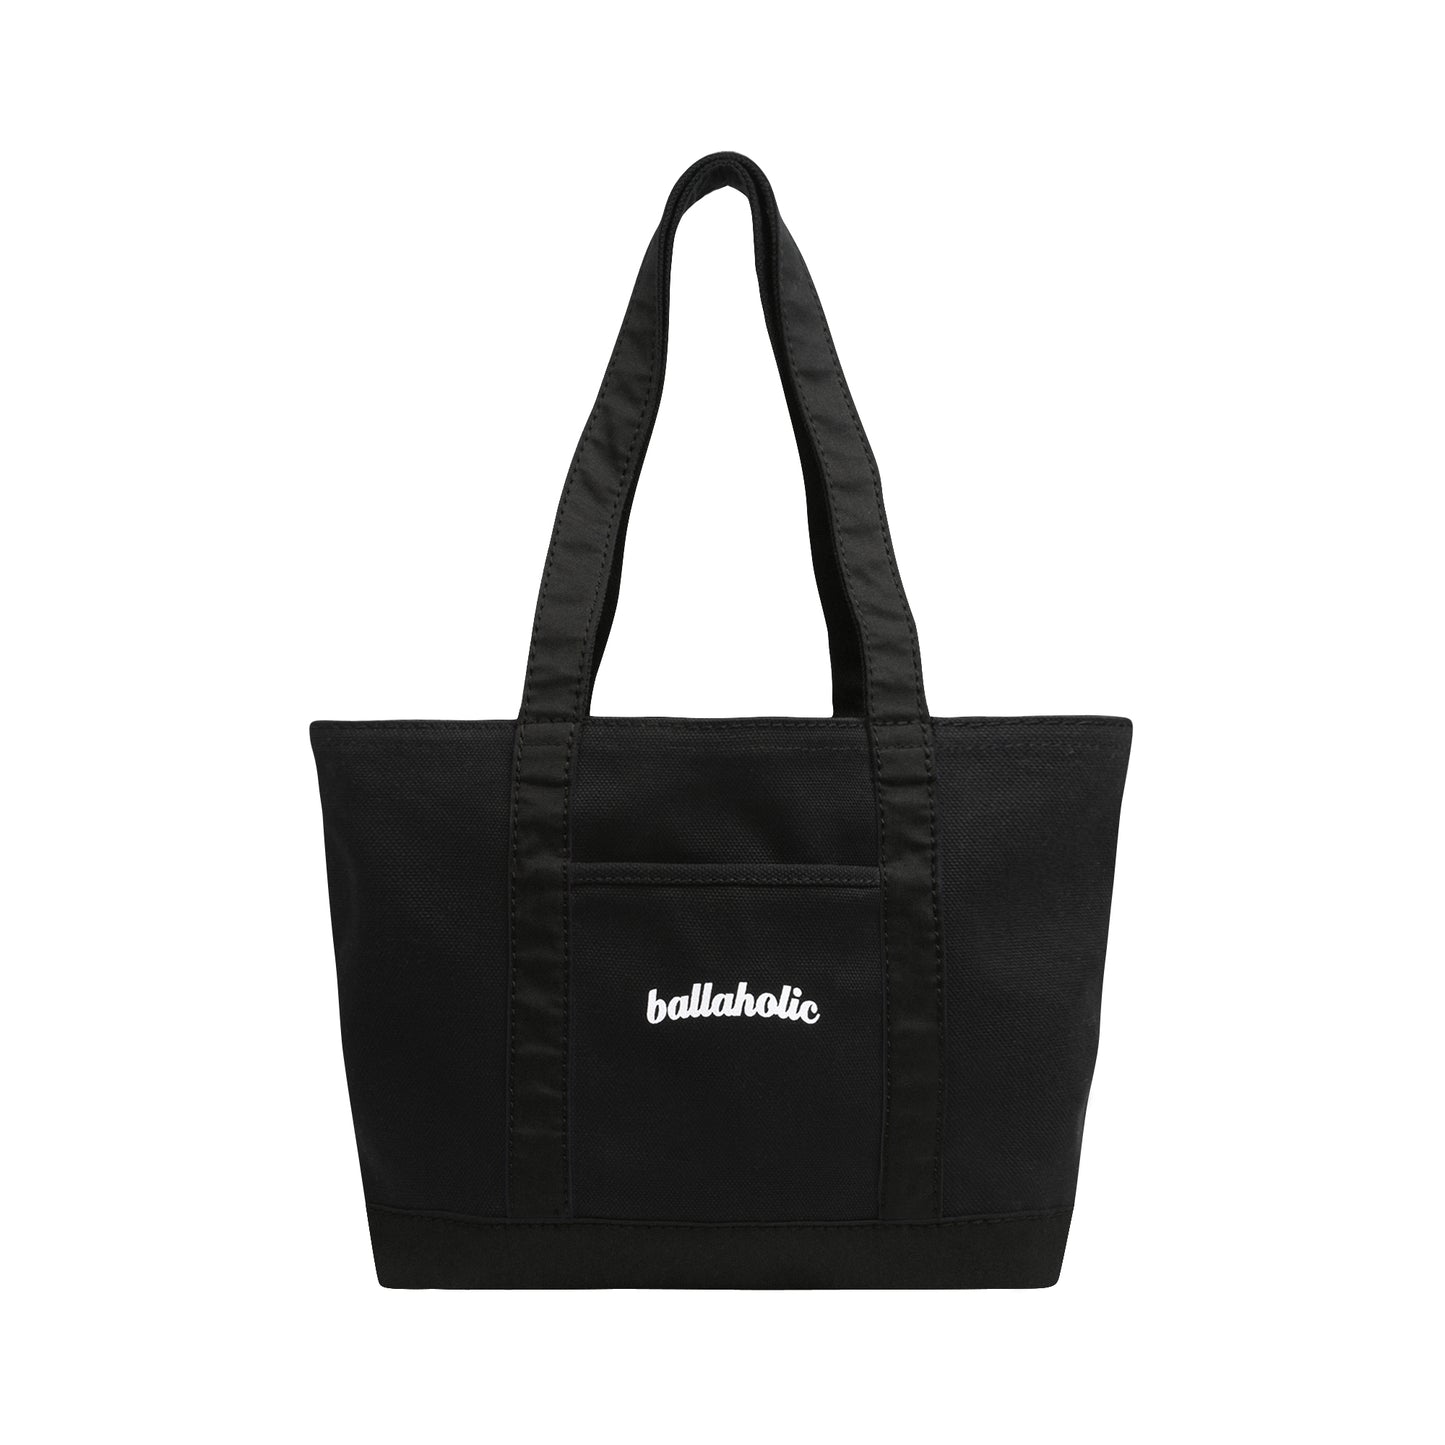 Ball On Journey Logo Canvas Tote Bag (black) M